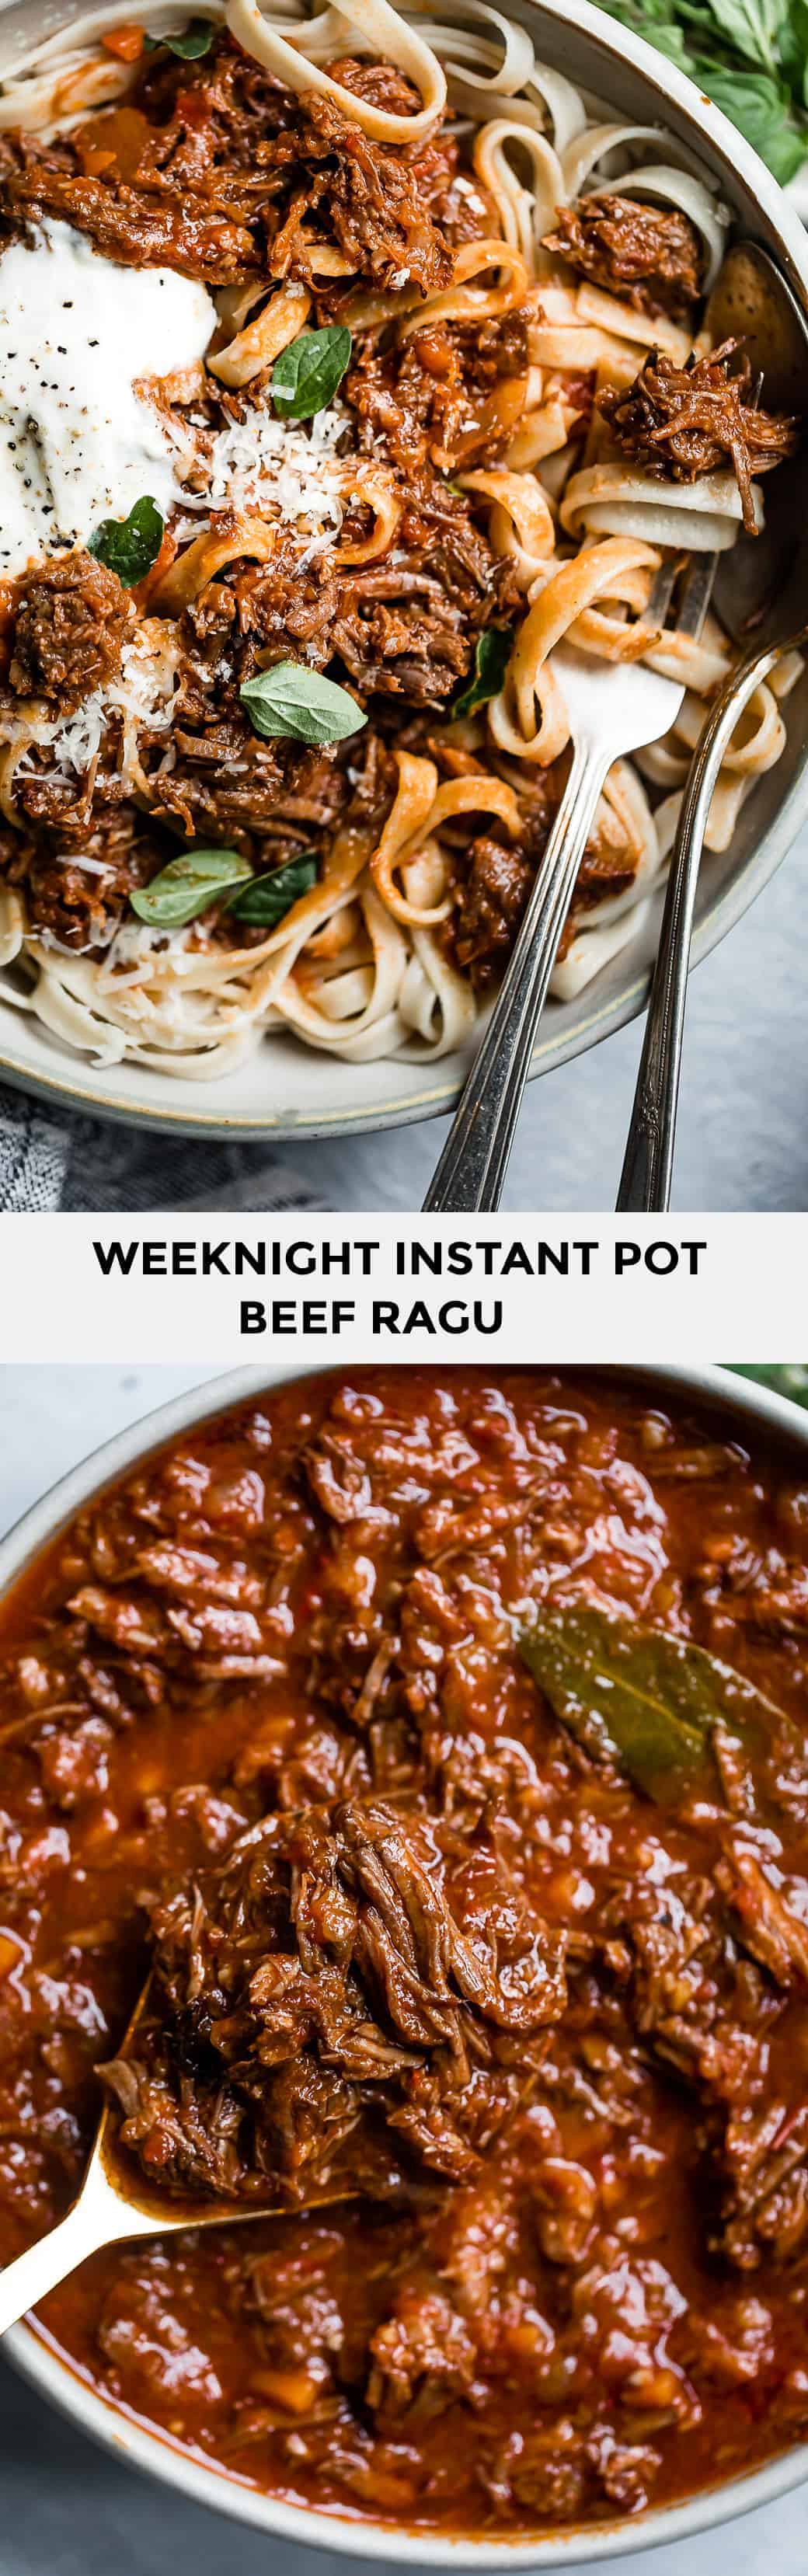 Weeknight Instant Pot Beef Ragu